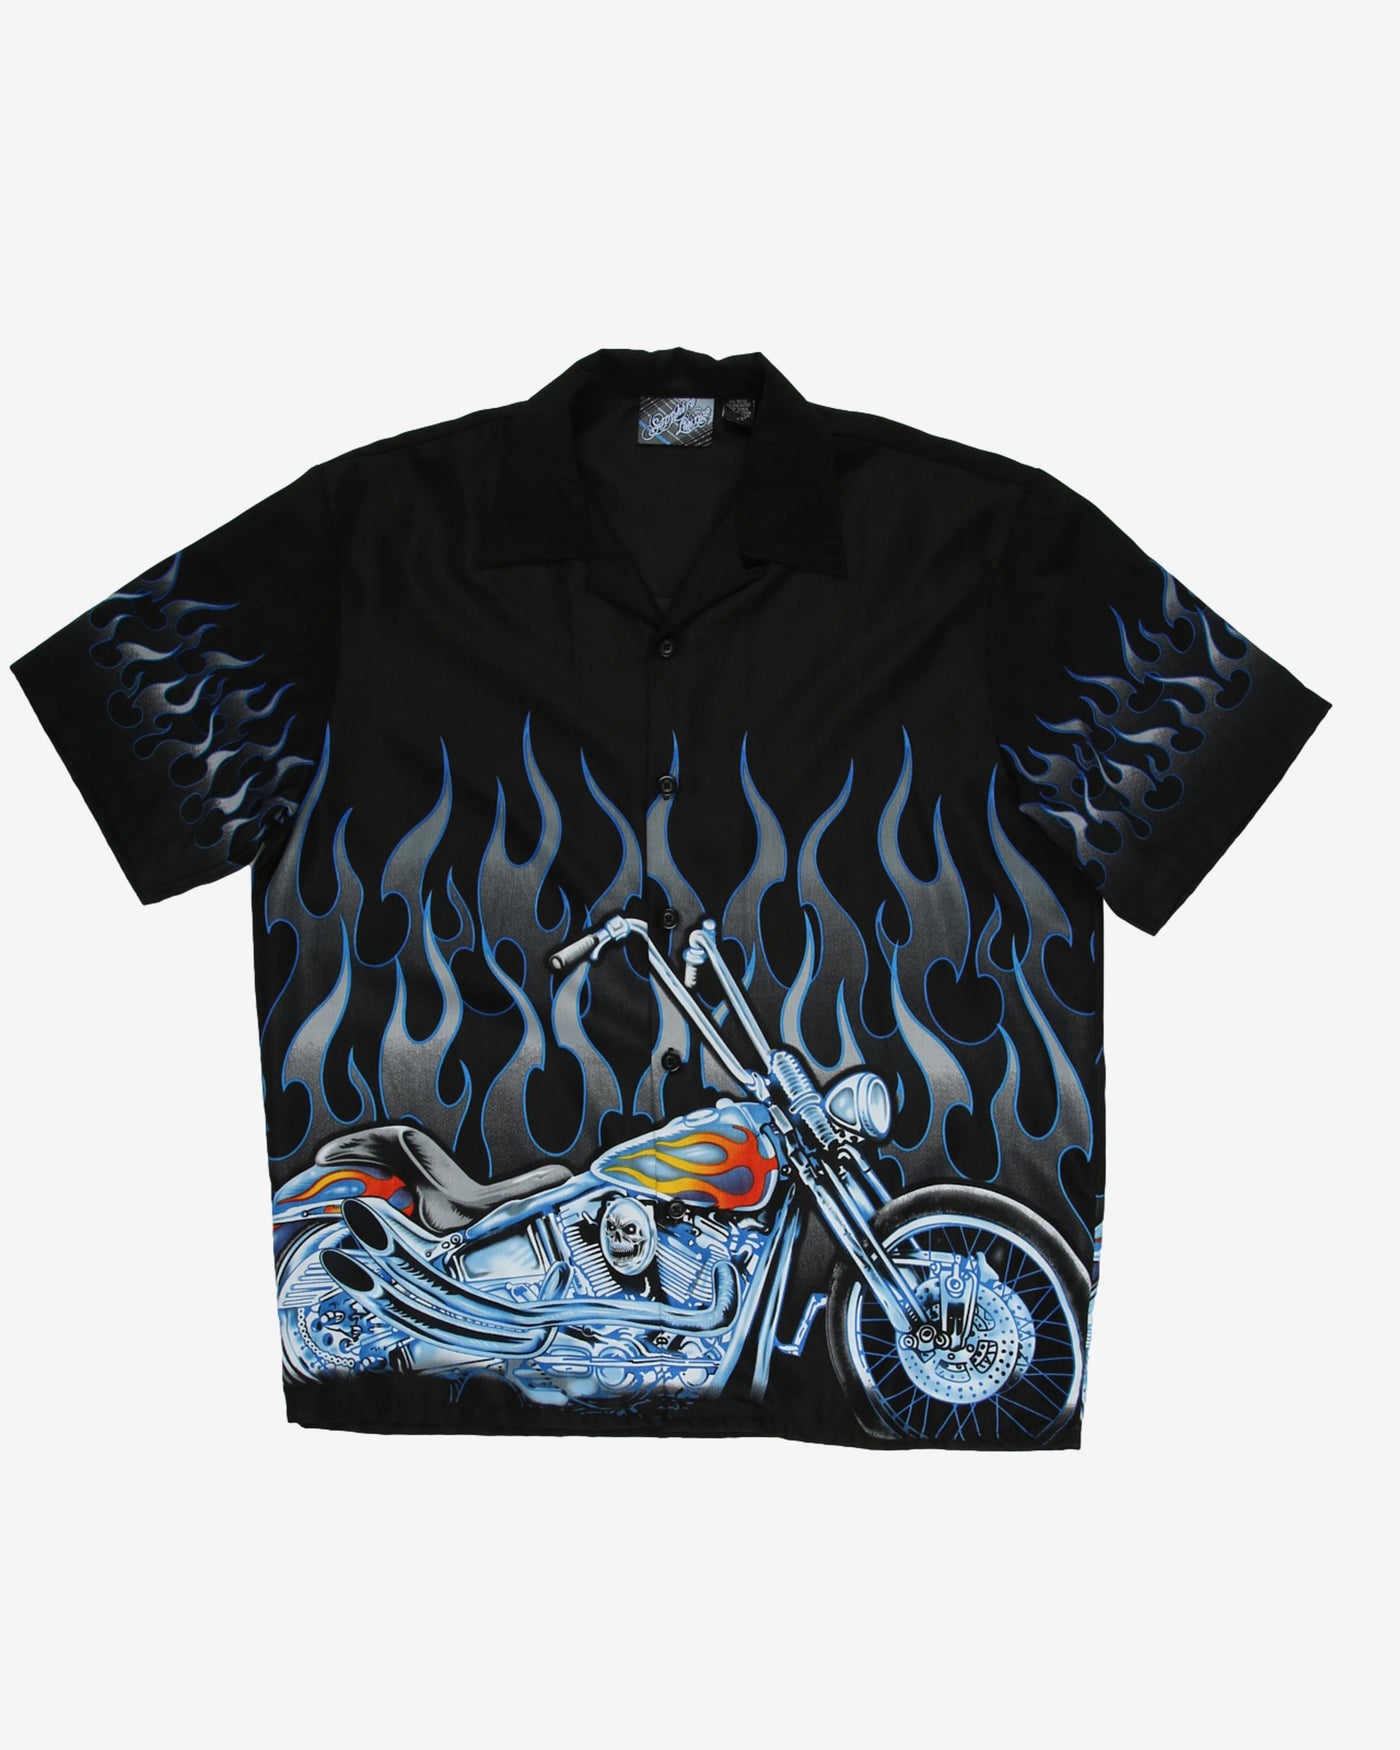 Motorcycle patterned shirt - XXL